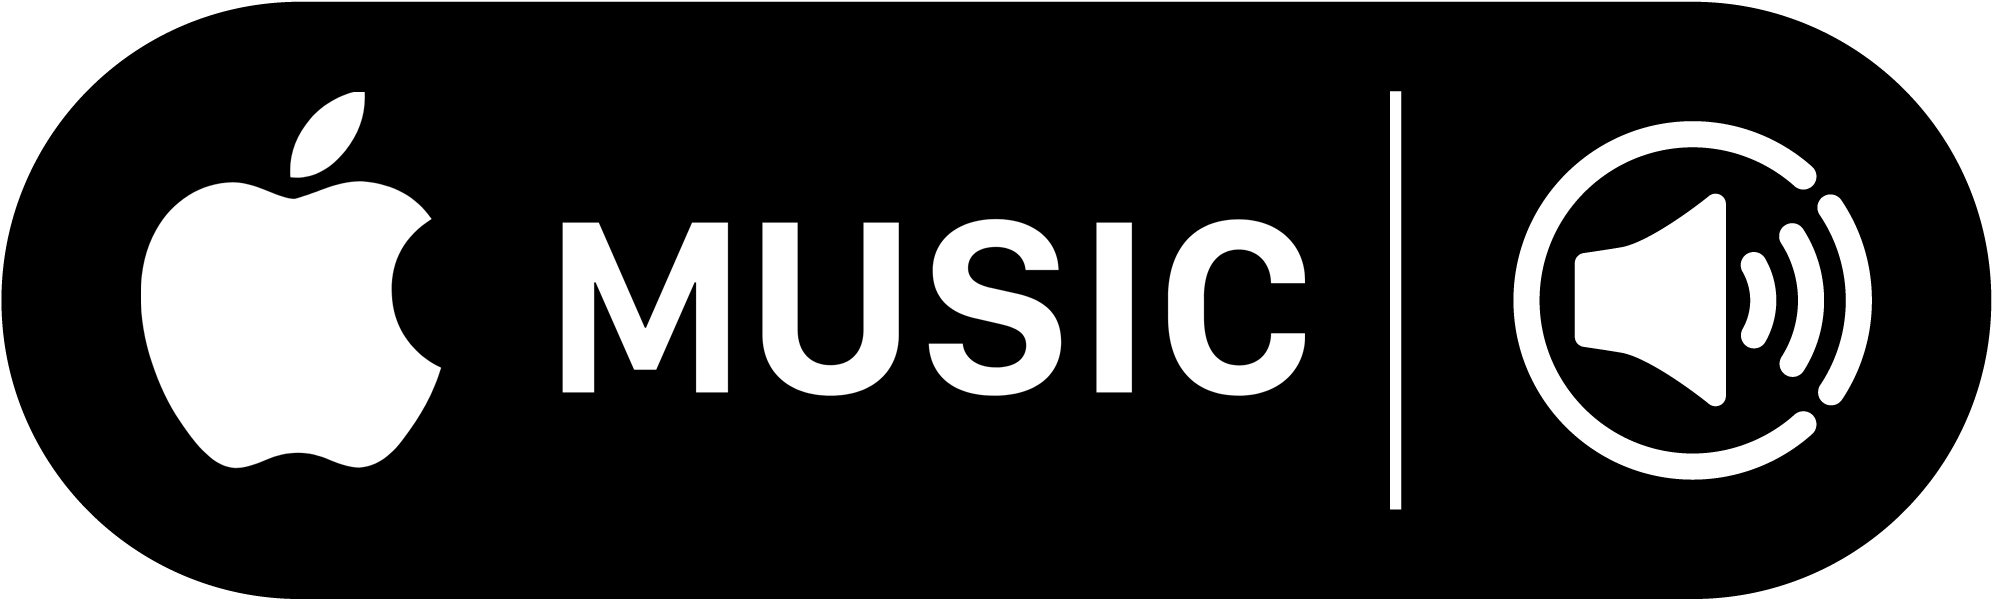 Apple Music Logo - LogoDix